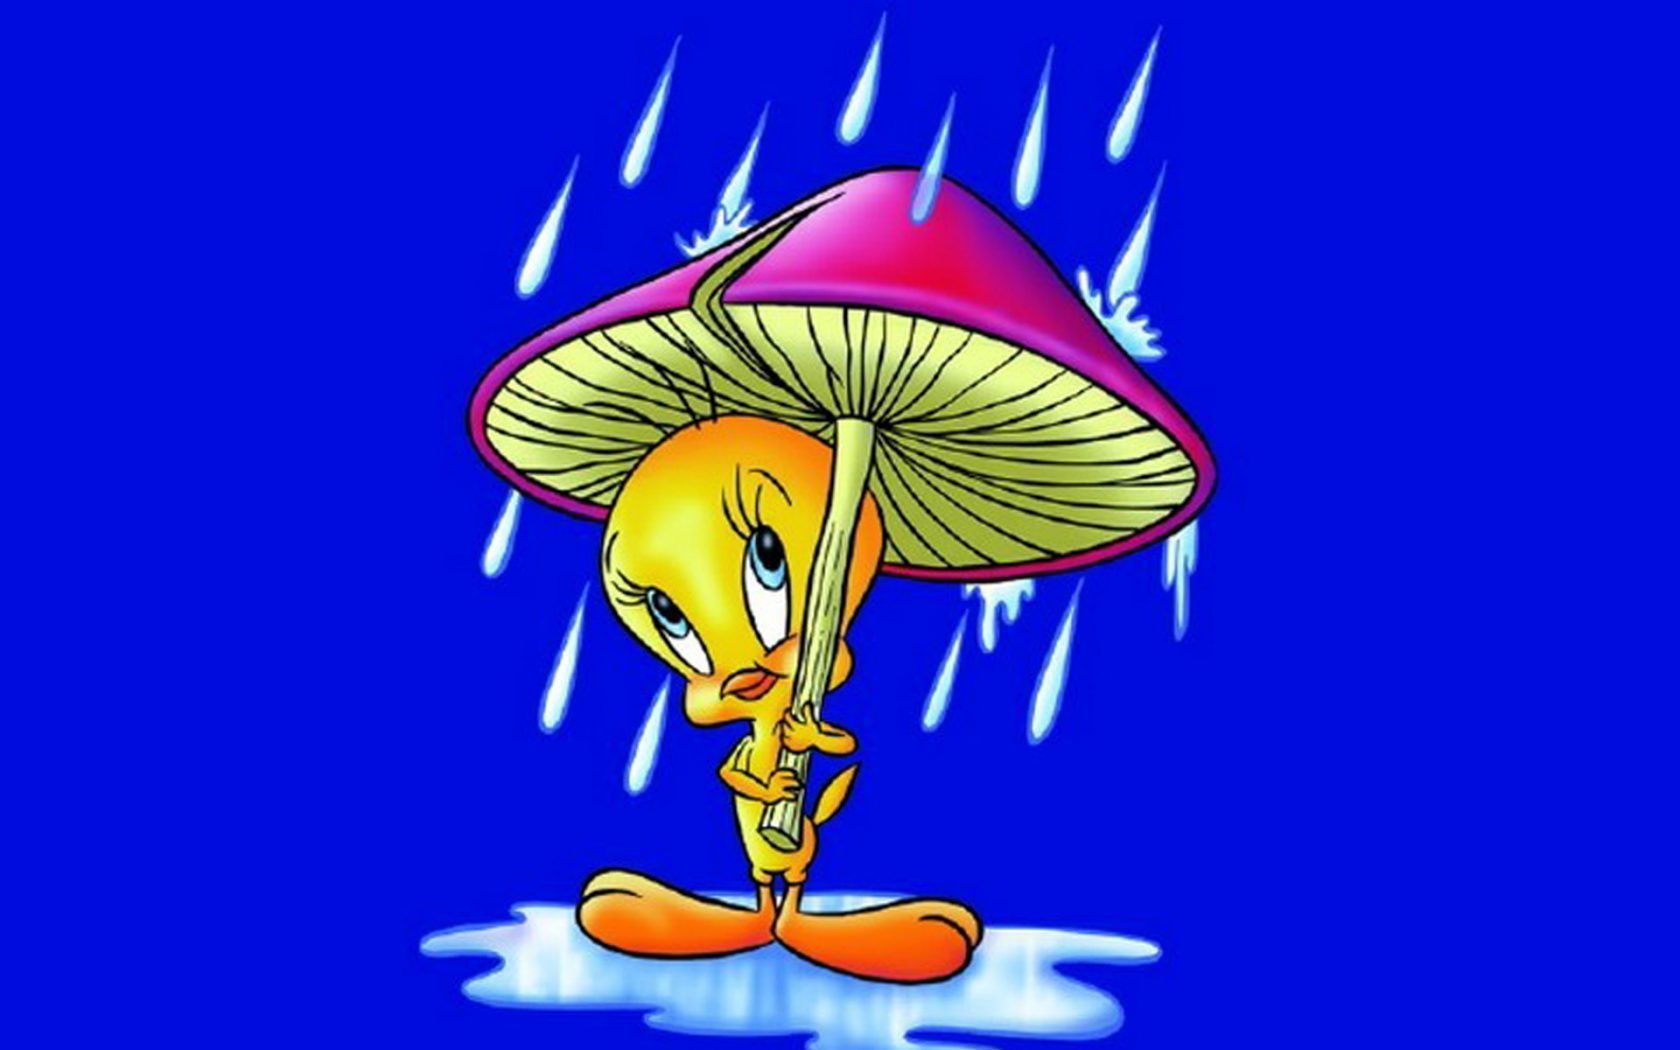 Cartoon Tweety Bird Rain Umbrella Mushroom Blue Desktop Wallpaper Background 1920x1200, Wallpaper13.com